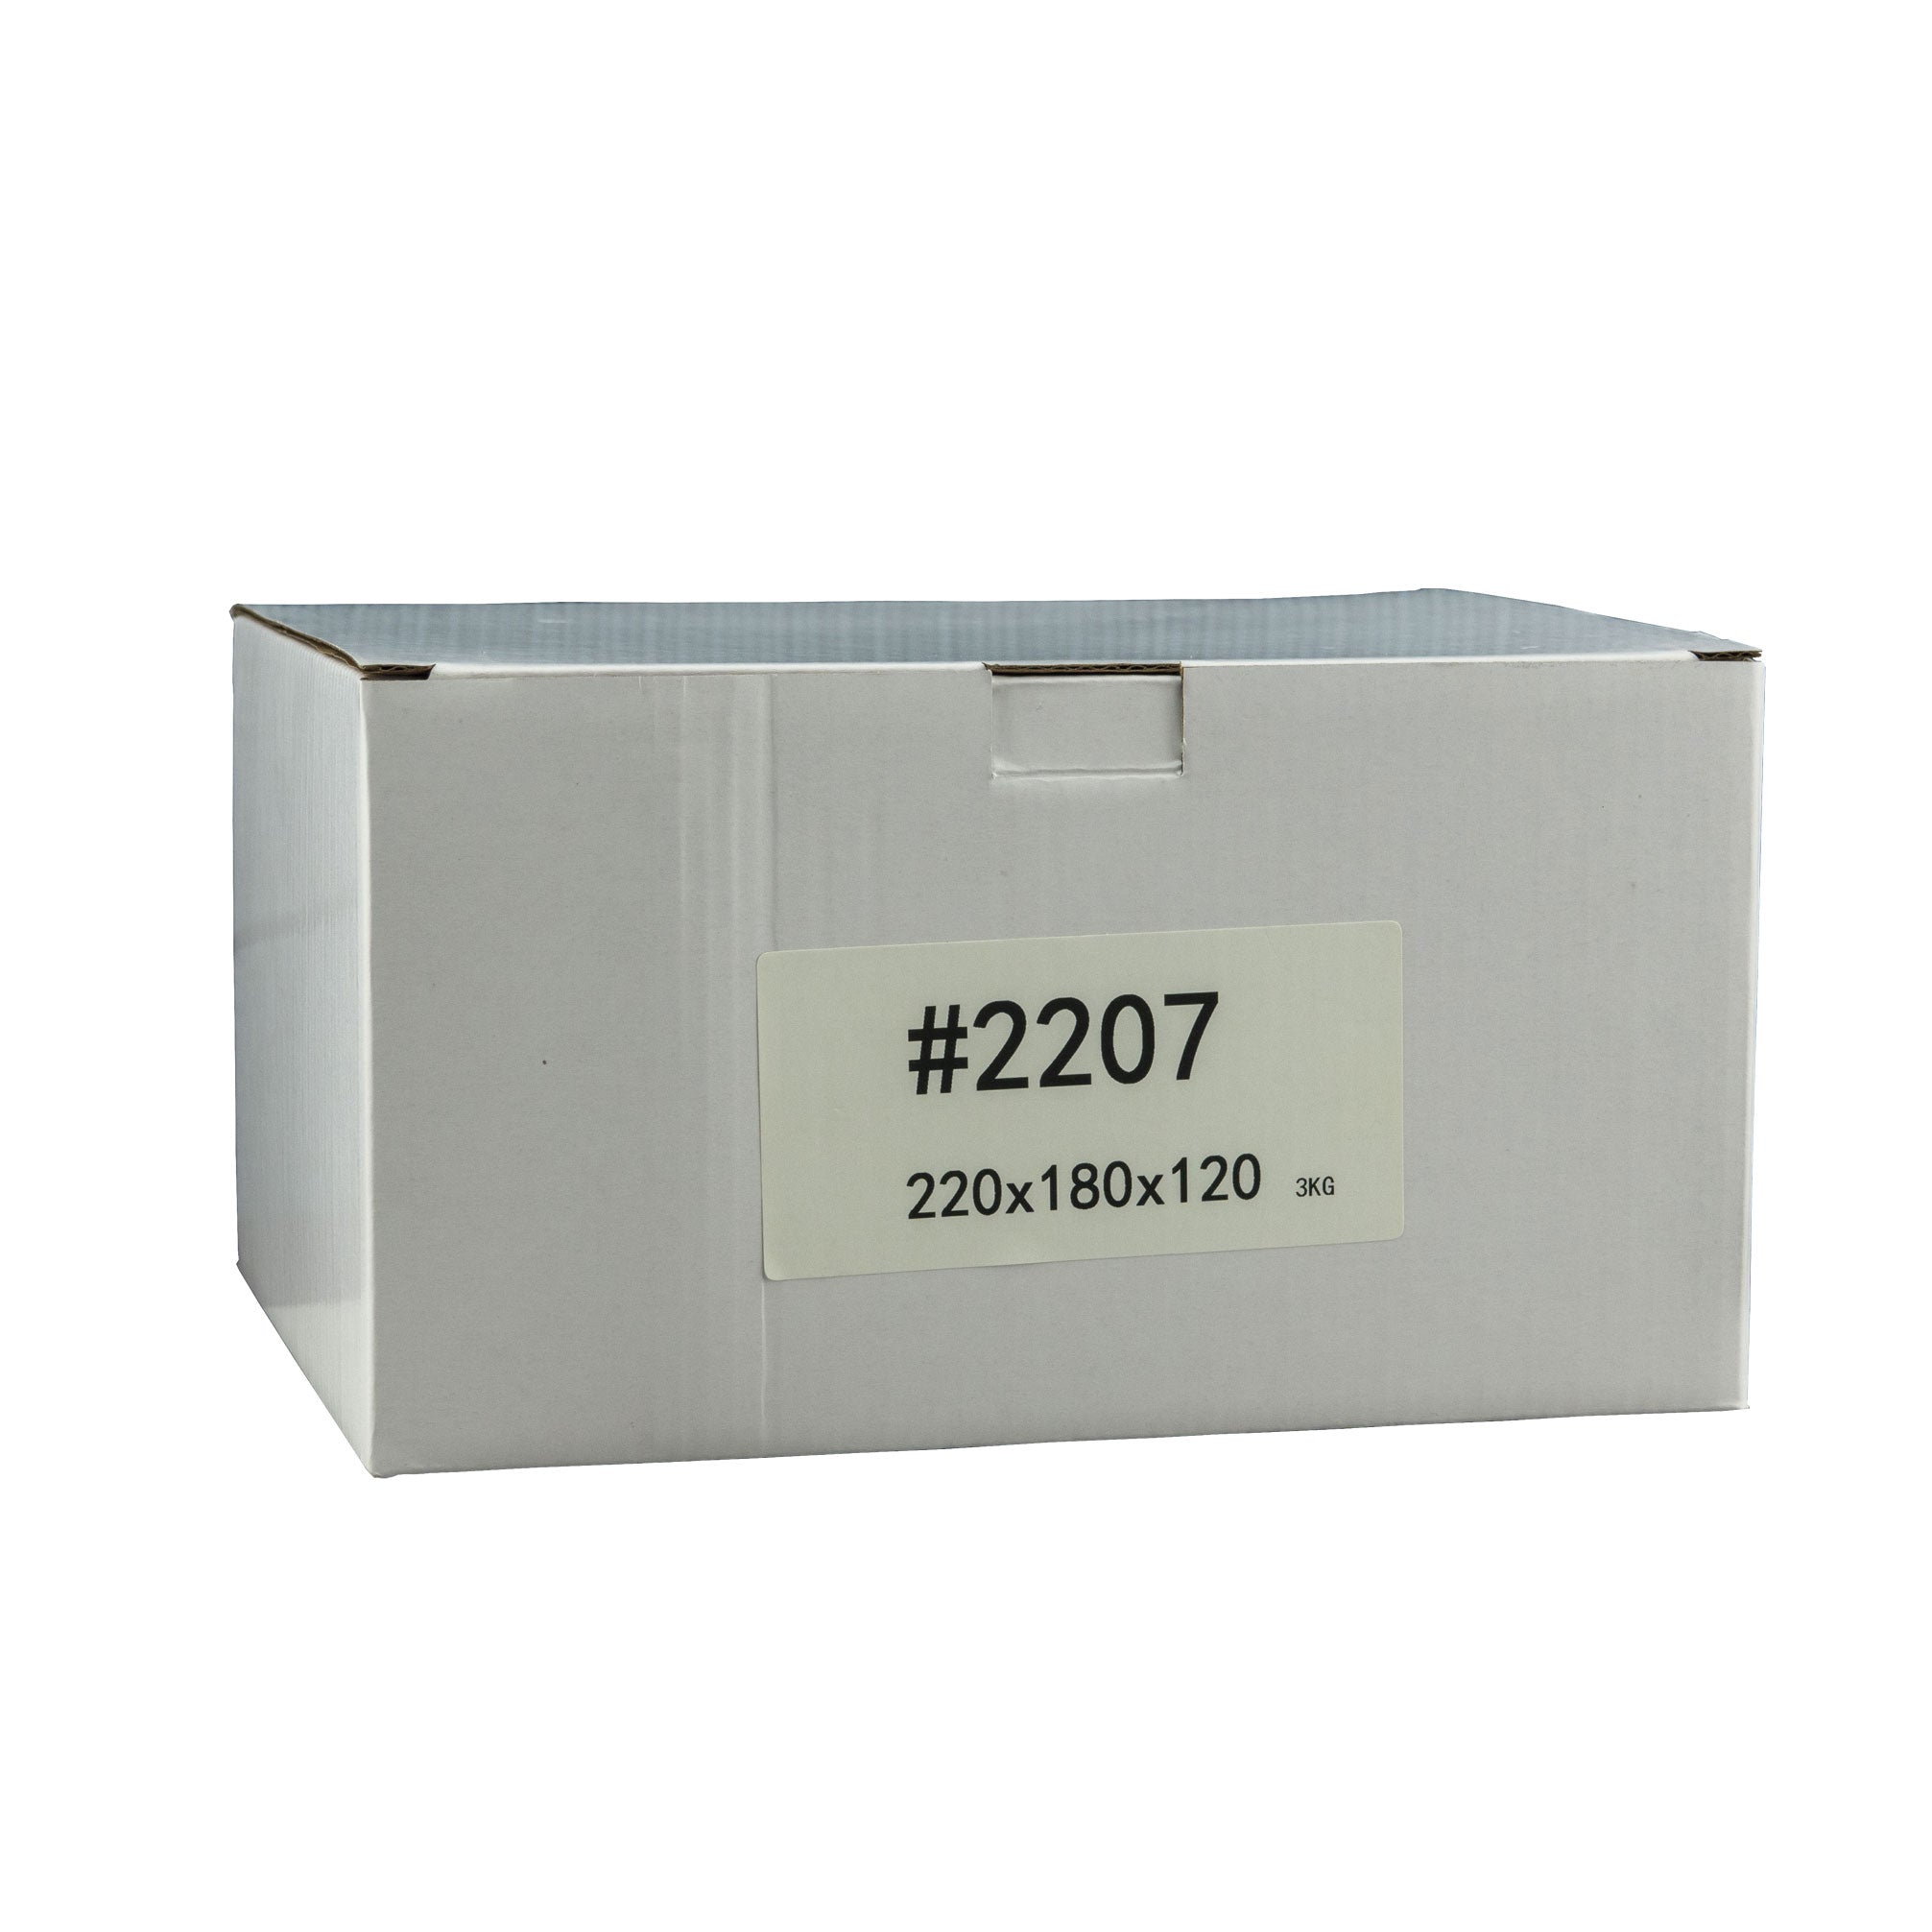 220mm x 180mm x 120mm White Carton Cardboard Shipping Box (#2207) for 3KG Satchel